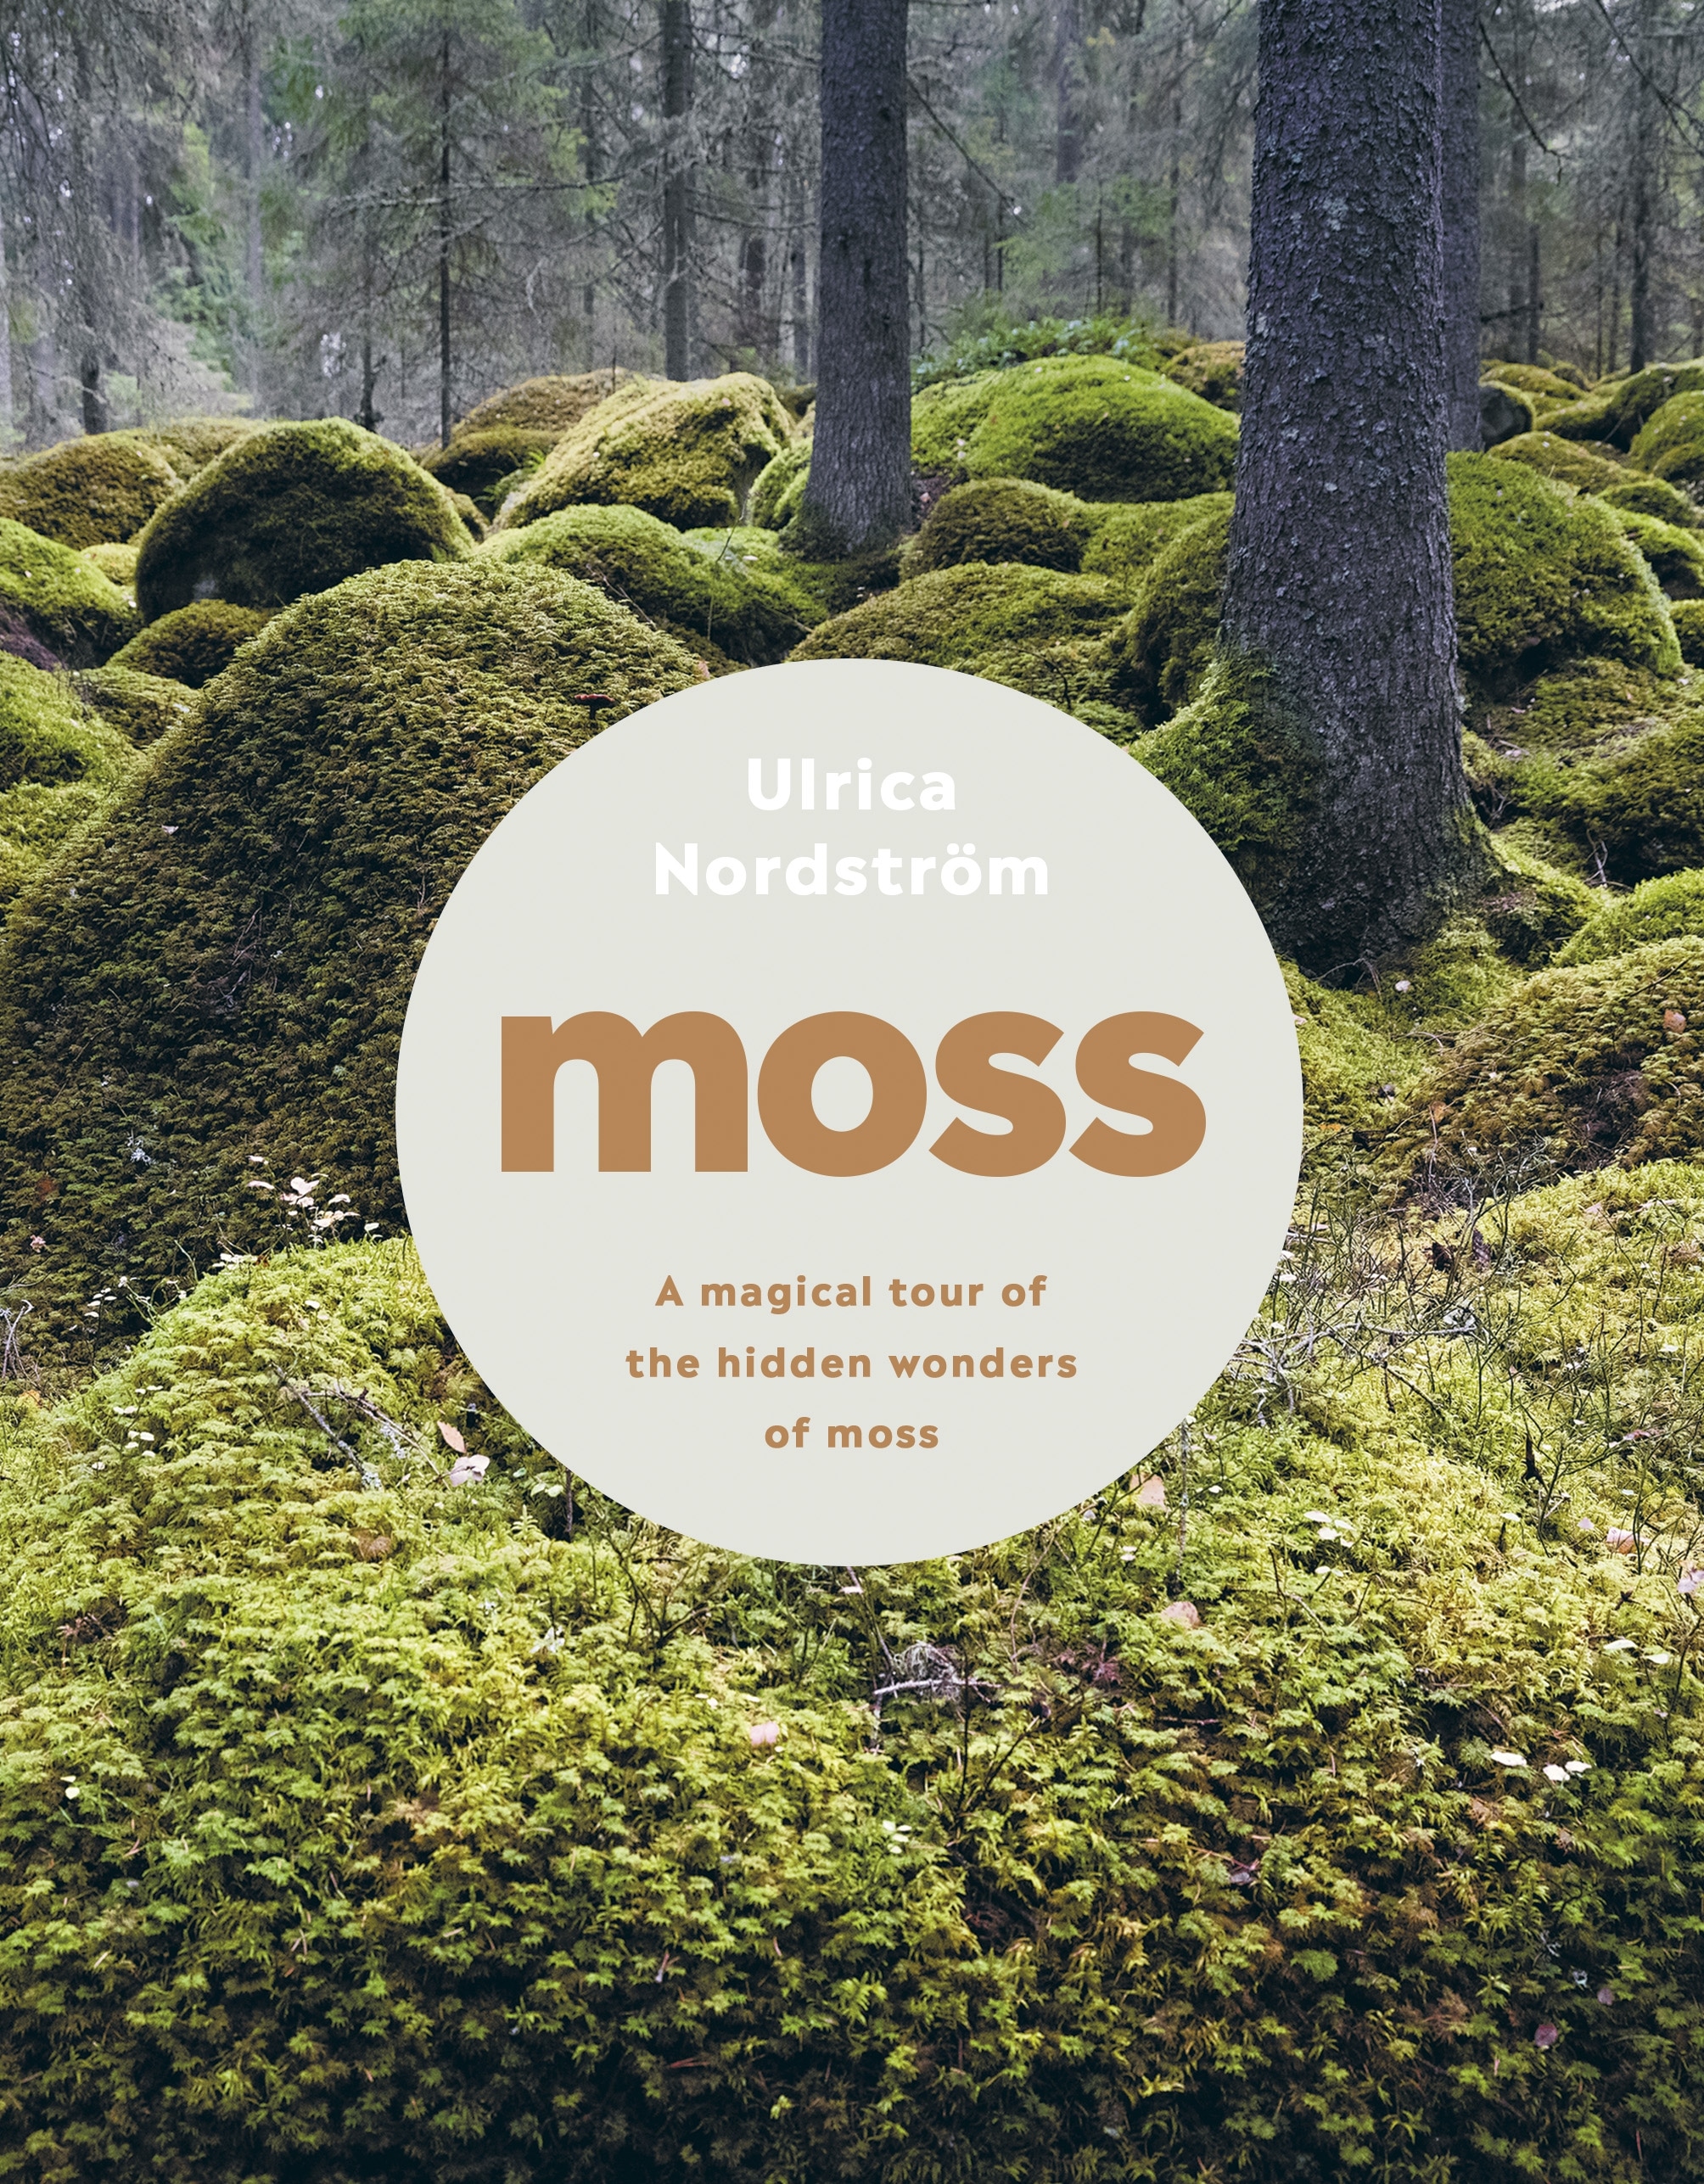 Book “Moss” by Ulrica Nordström — March 21, 2019